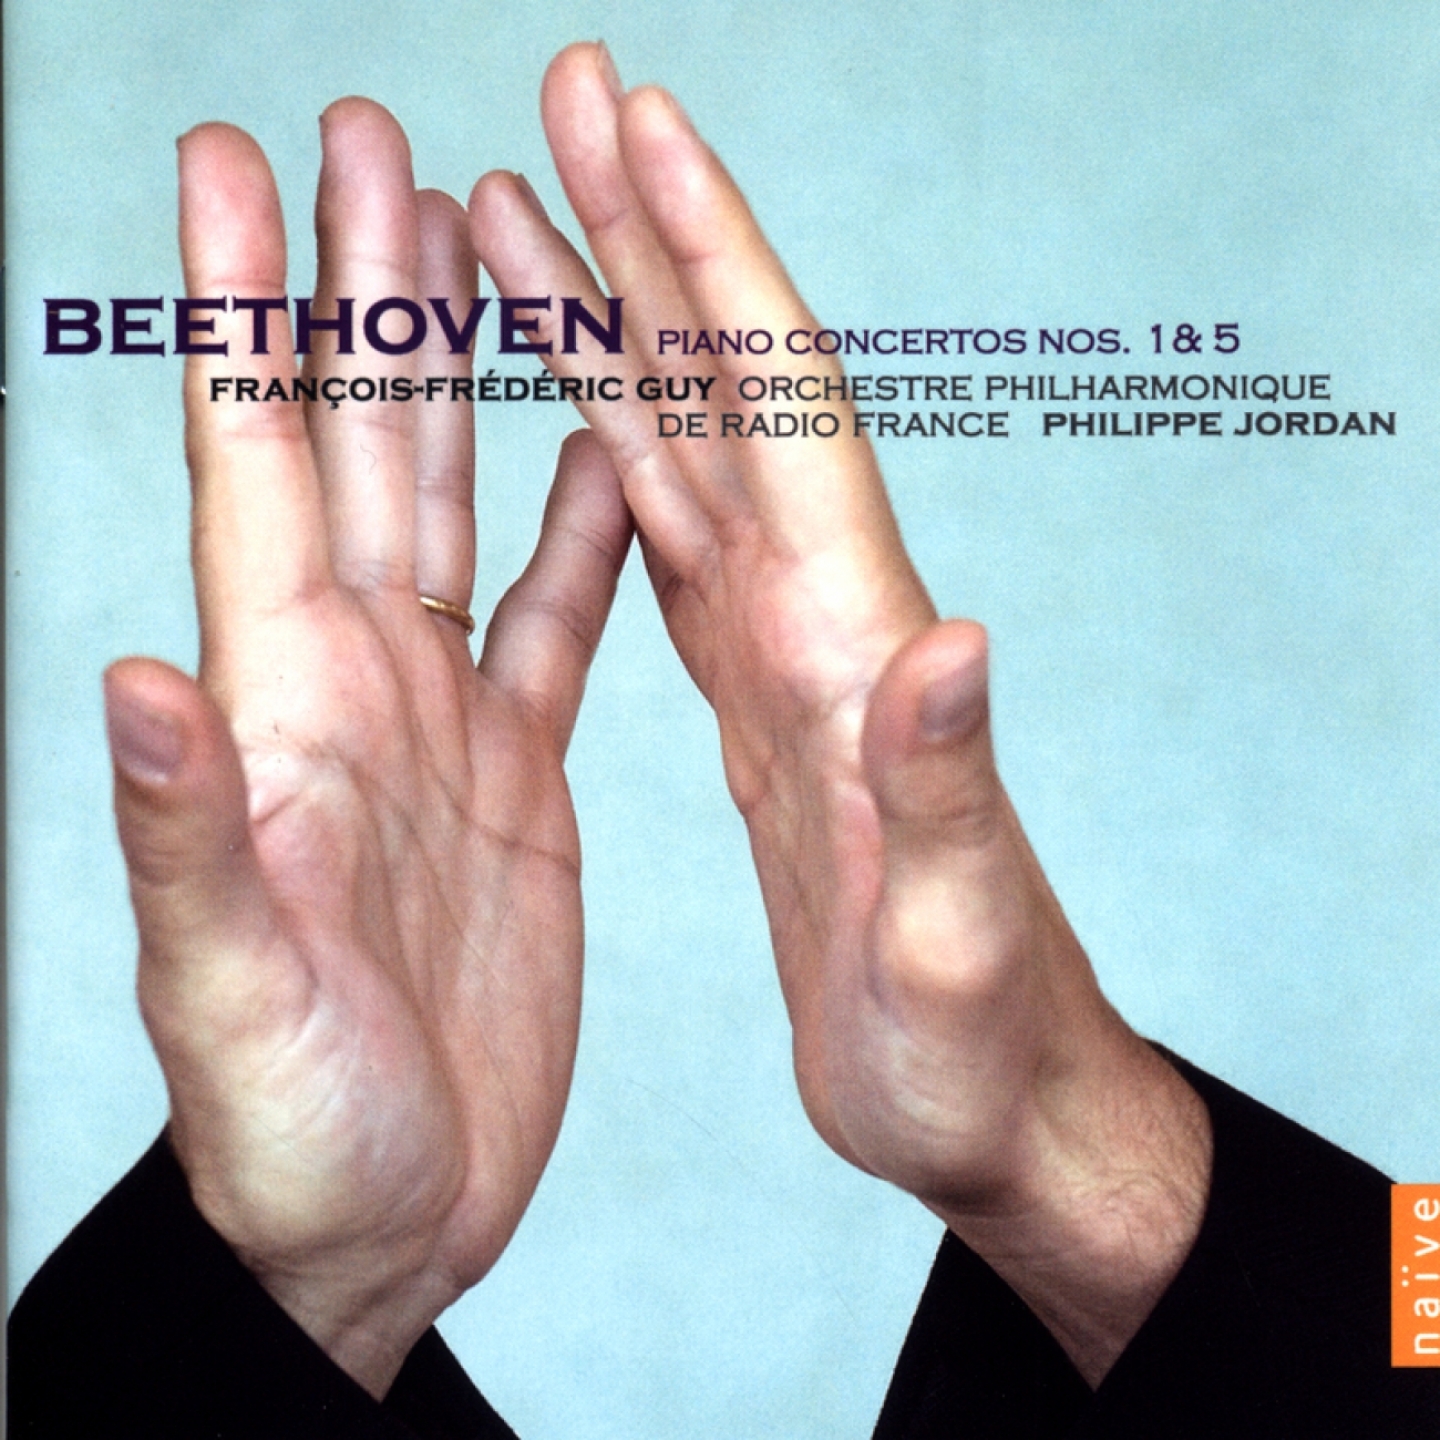 Concerto for Piano and Orchestra No. 1 in C Major, Op. 15: I. Allegro con Brio